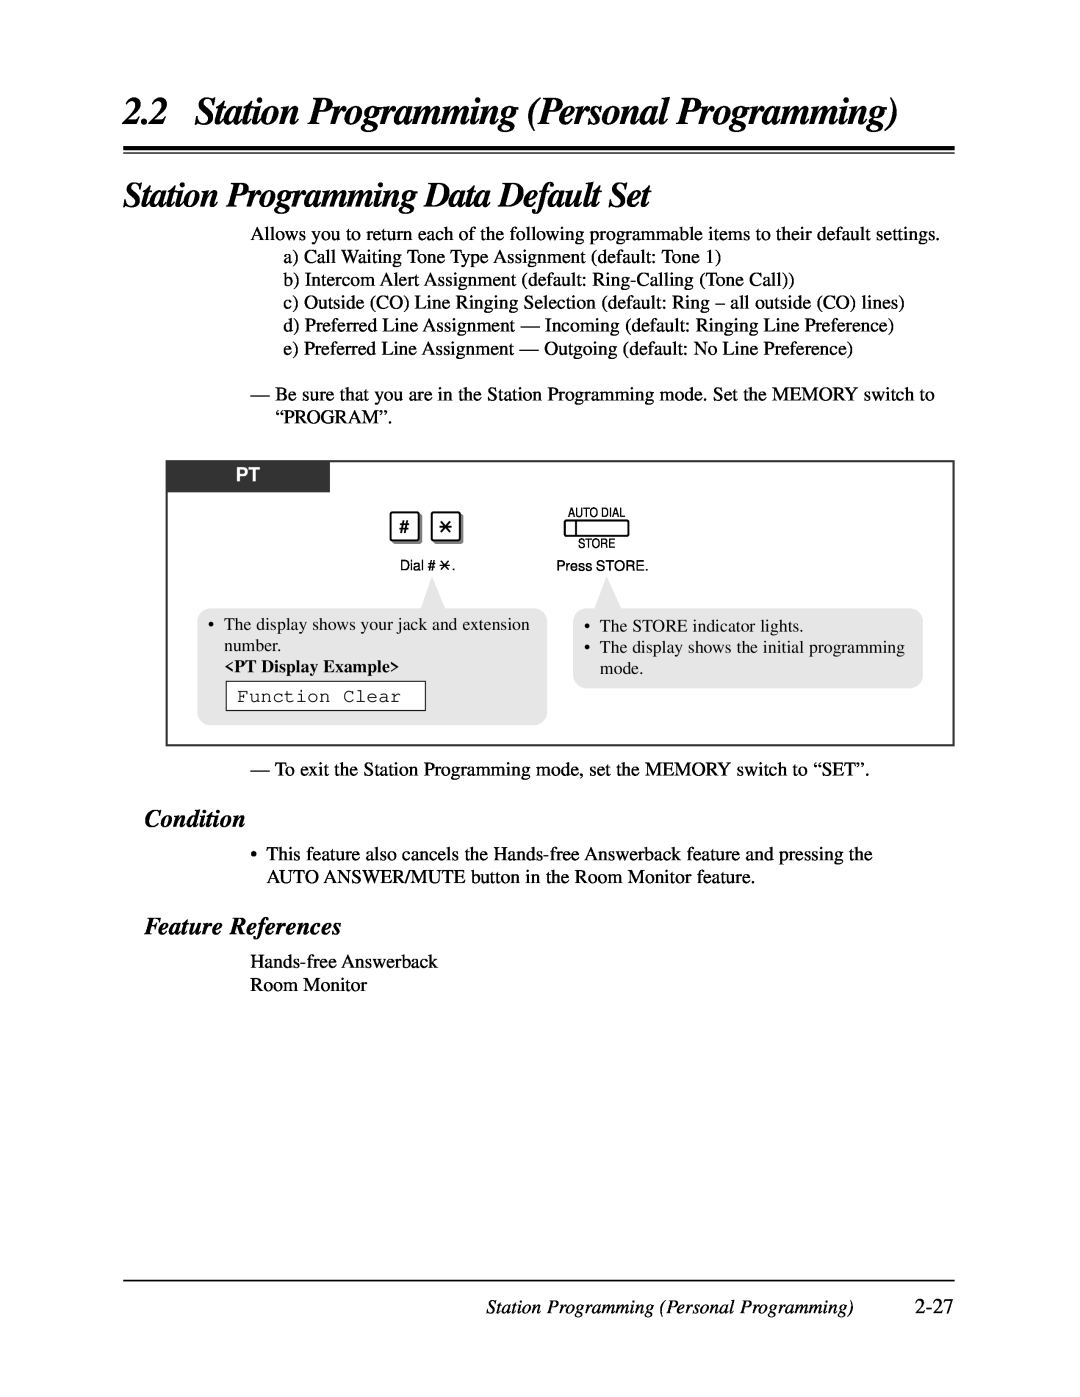 Panasonic KX-TA624 Station Programming Data Default Set, 2-27, Station Programming Personal Programming, Condition 